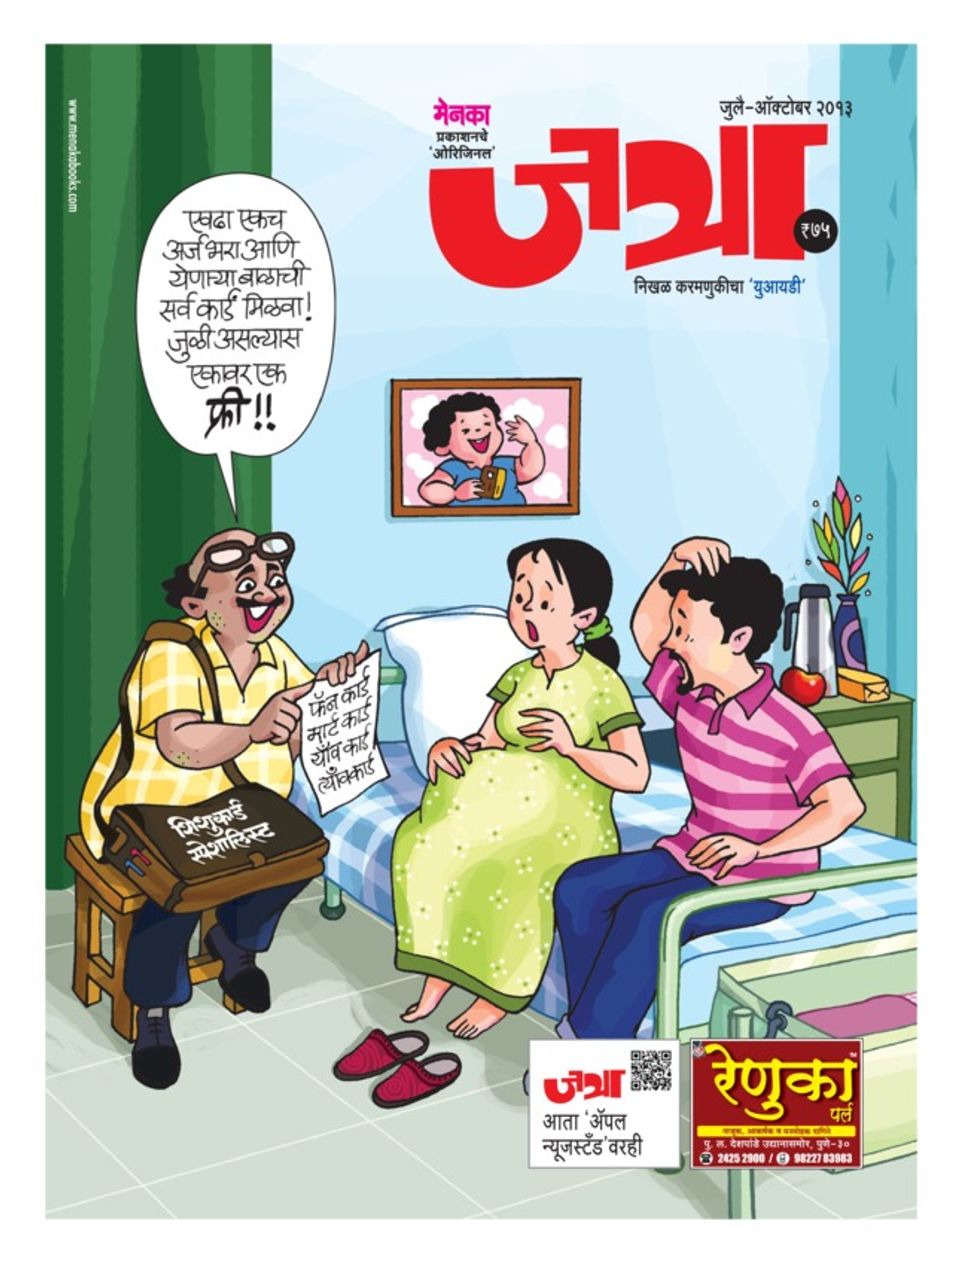 Baya Marathi Magazine Full